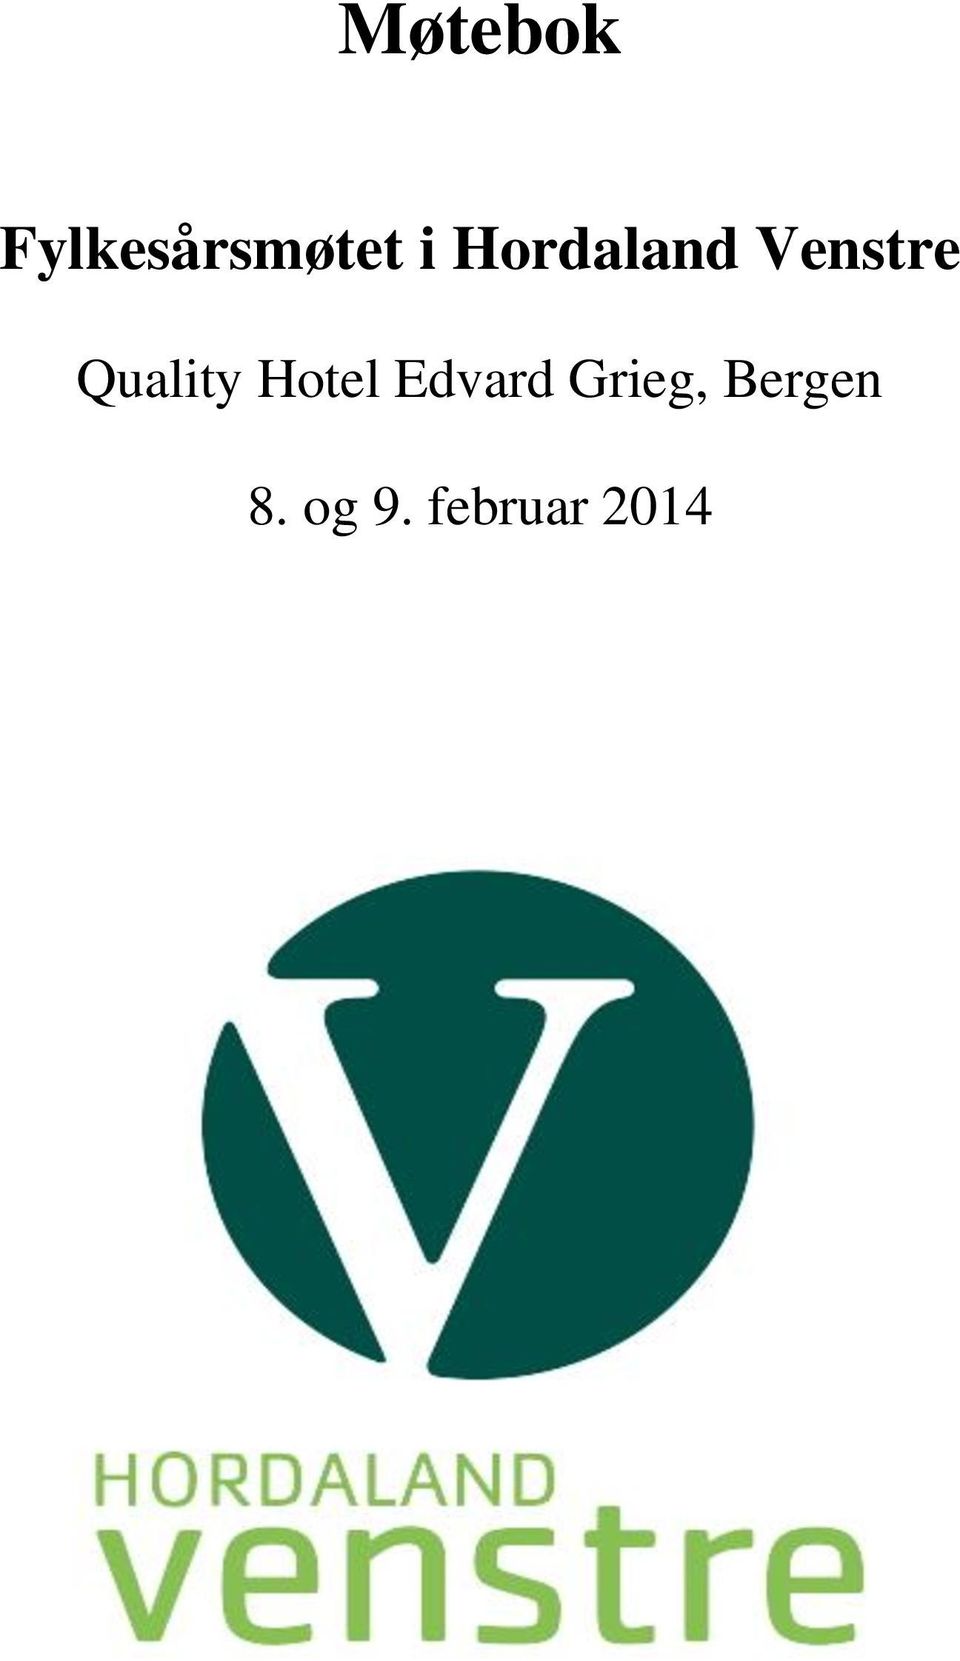 Quality Hotel Edvard